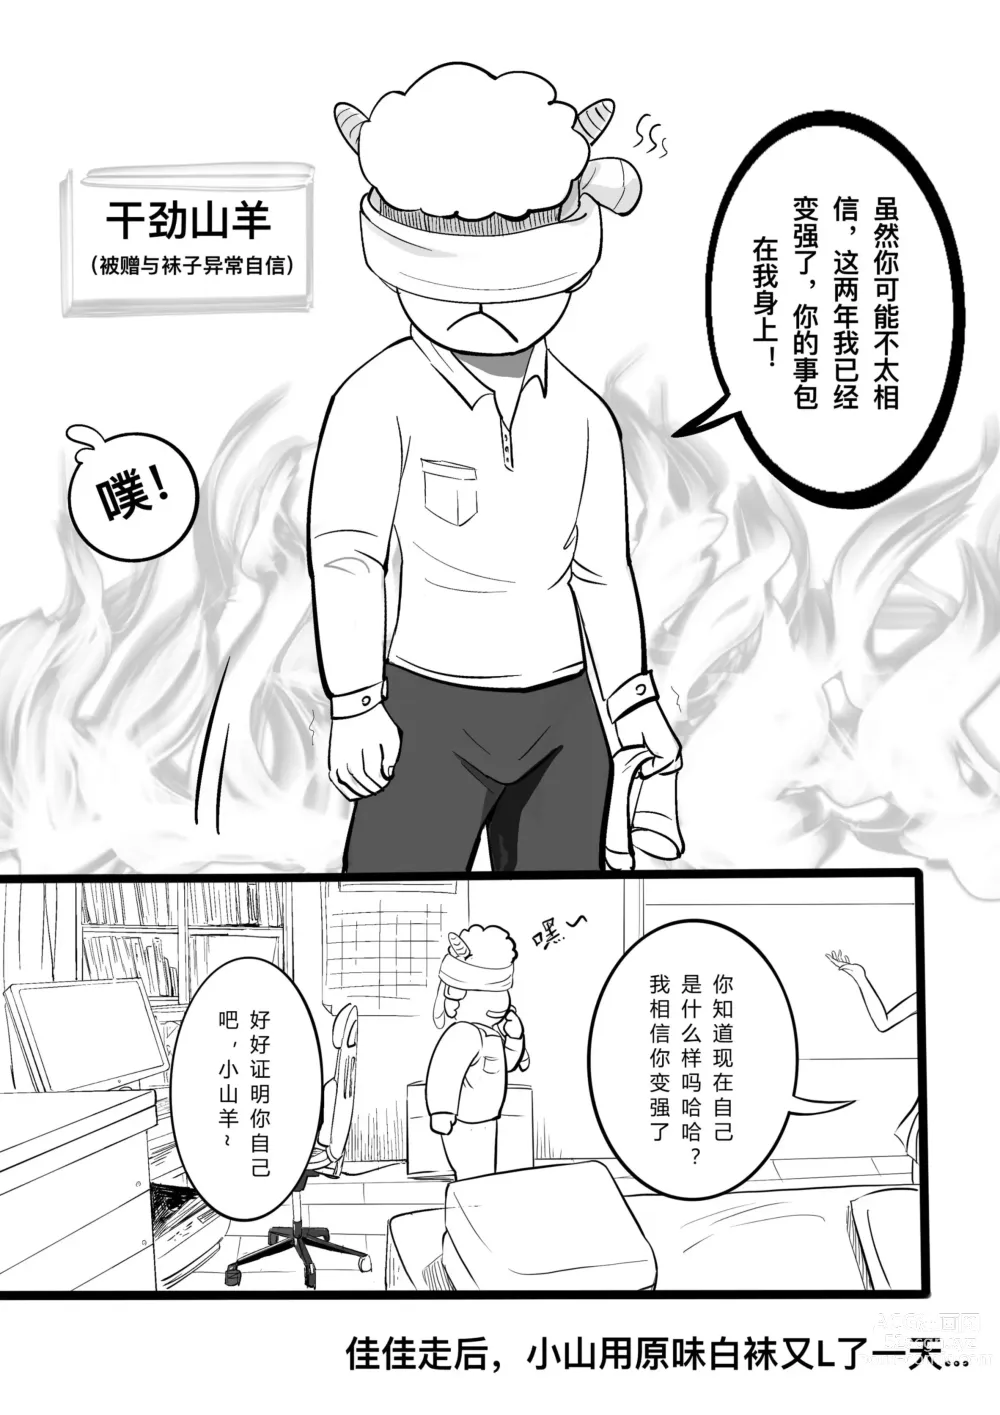 Page 13 of doujinshi GOAT-goat 特典Ⅰ